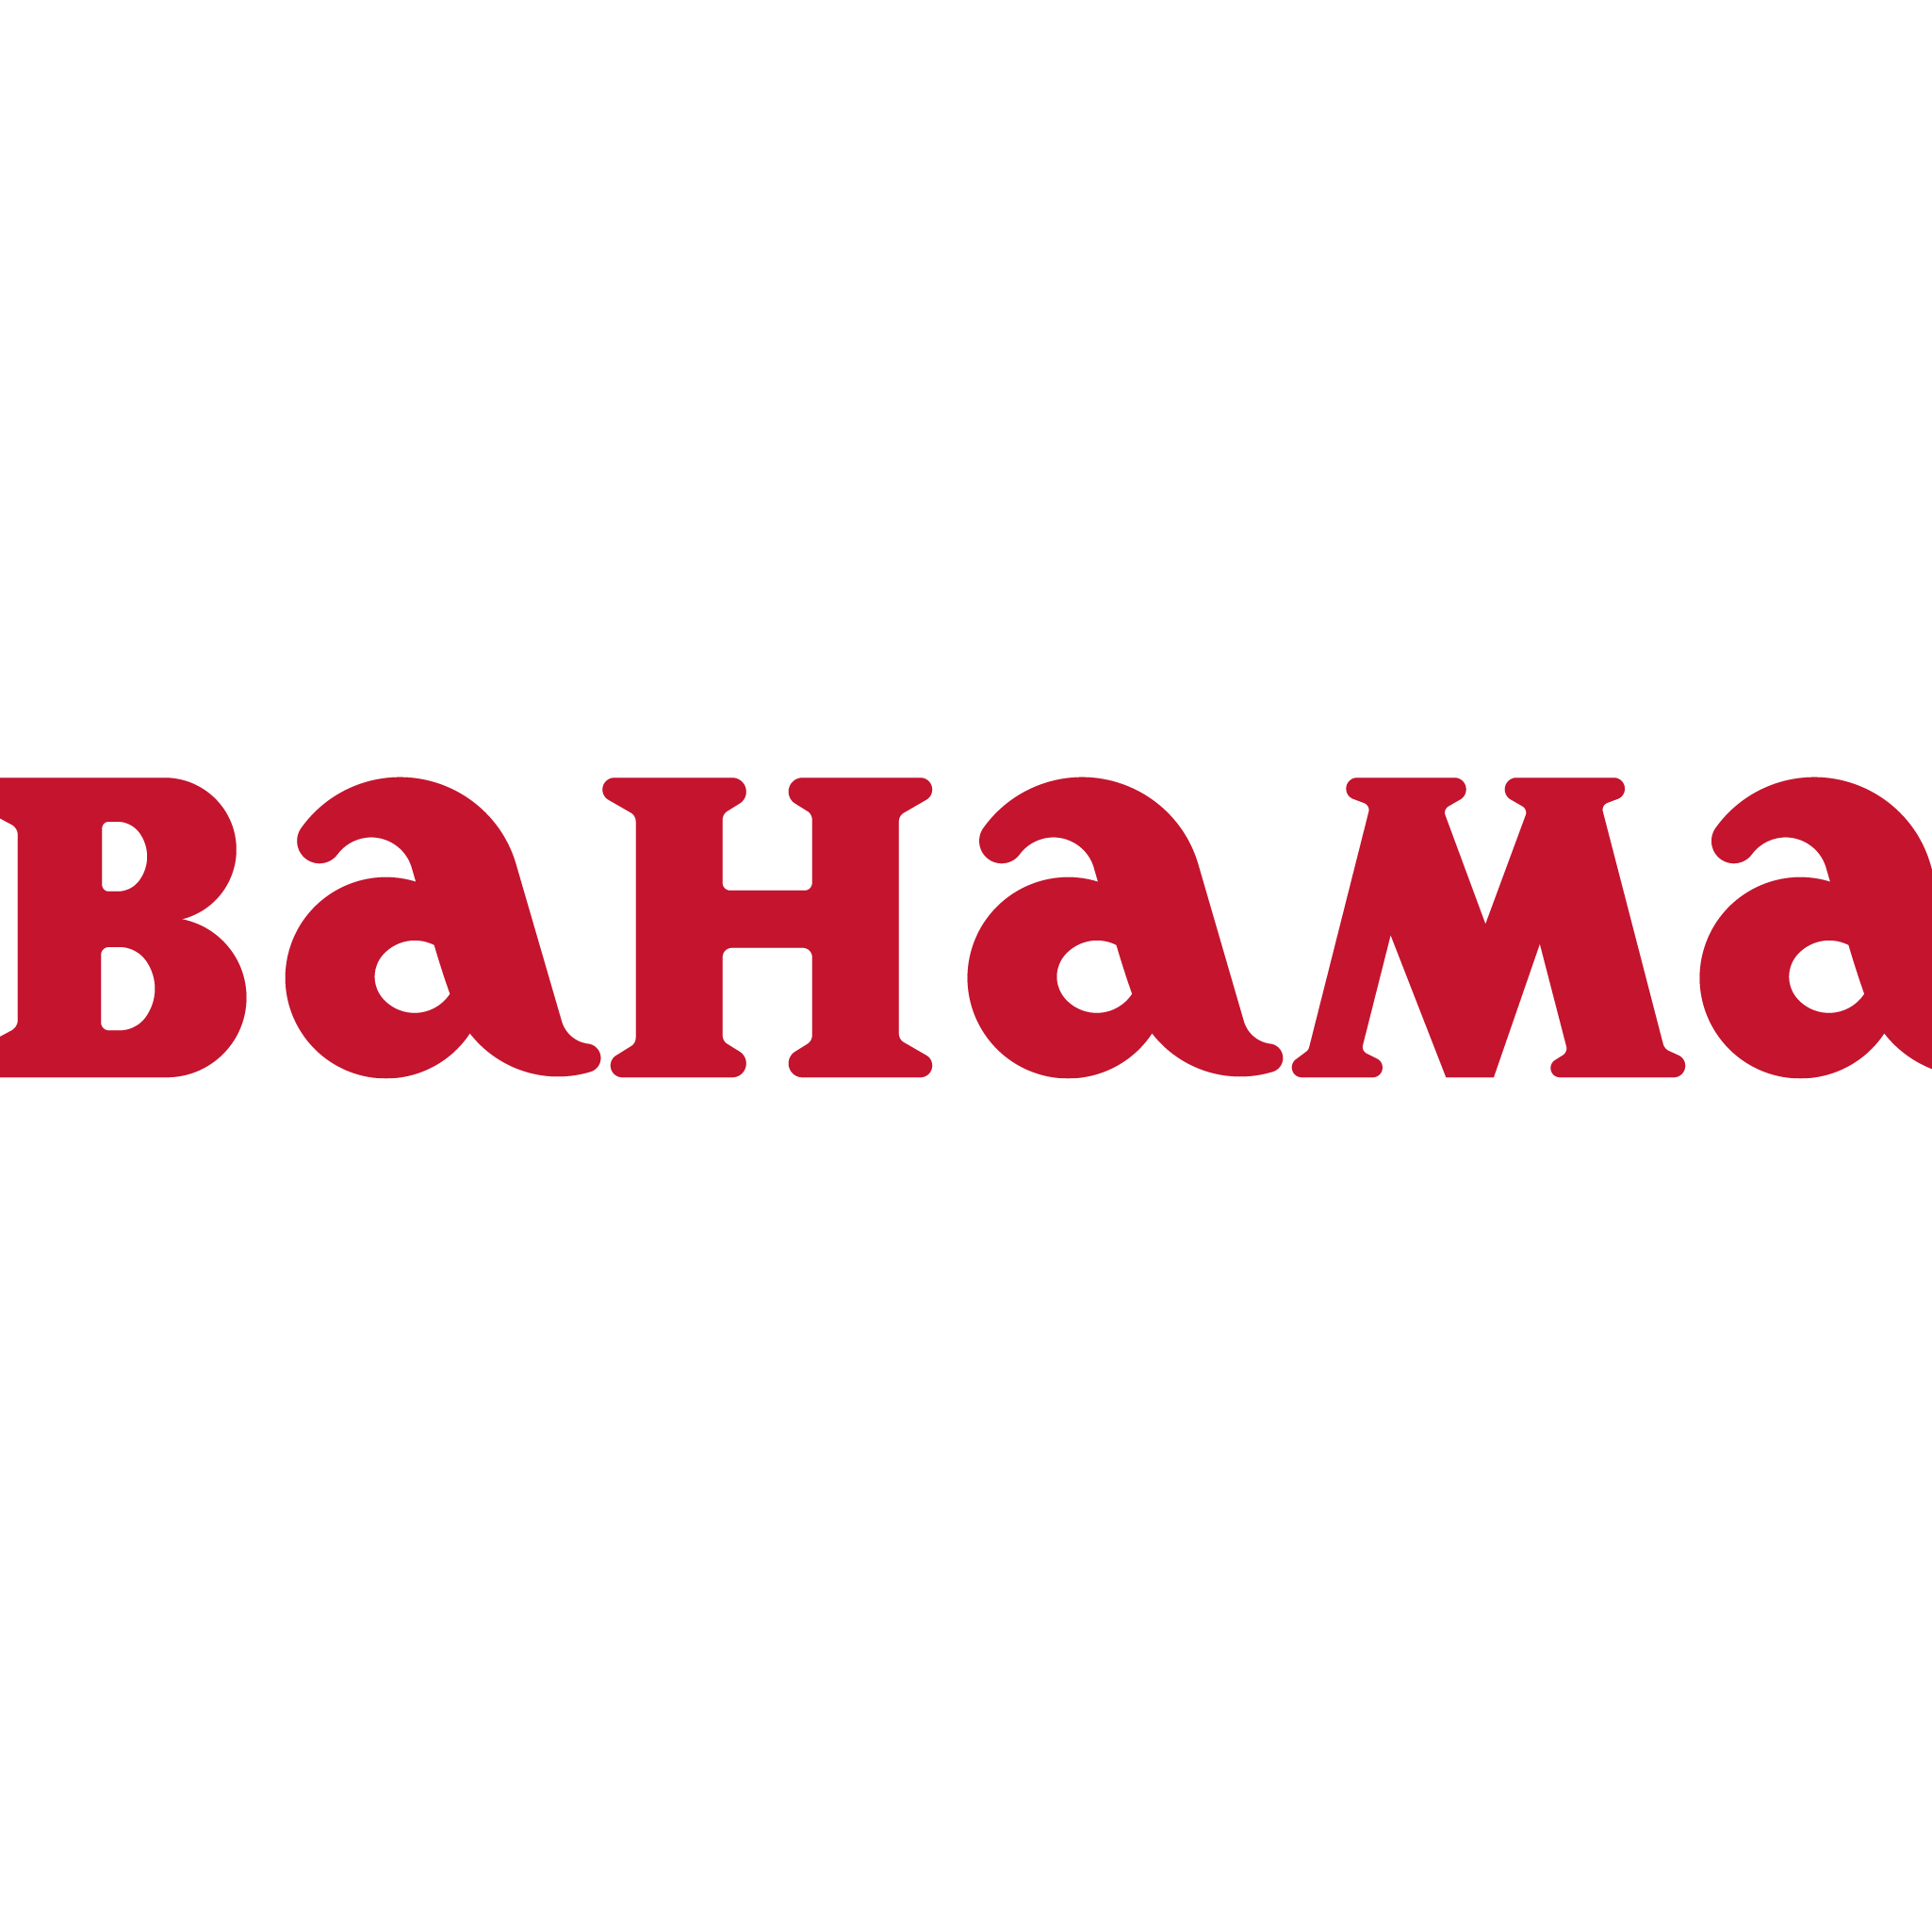 Bahama GmbH